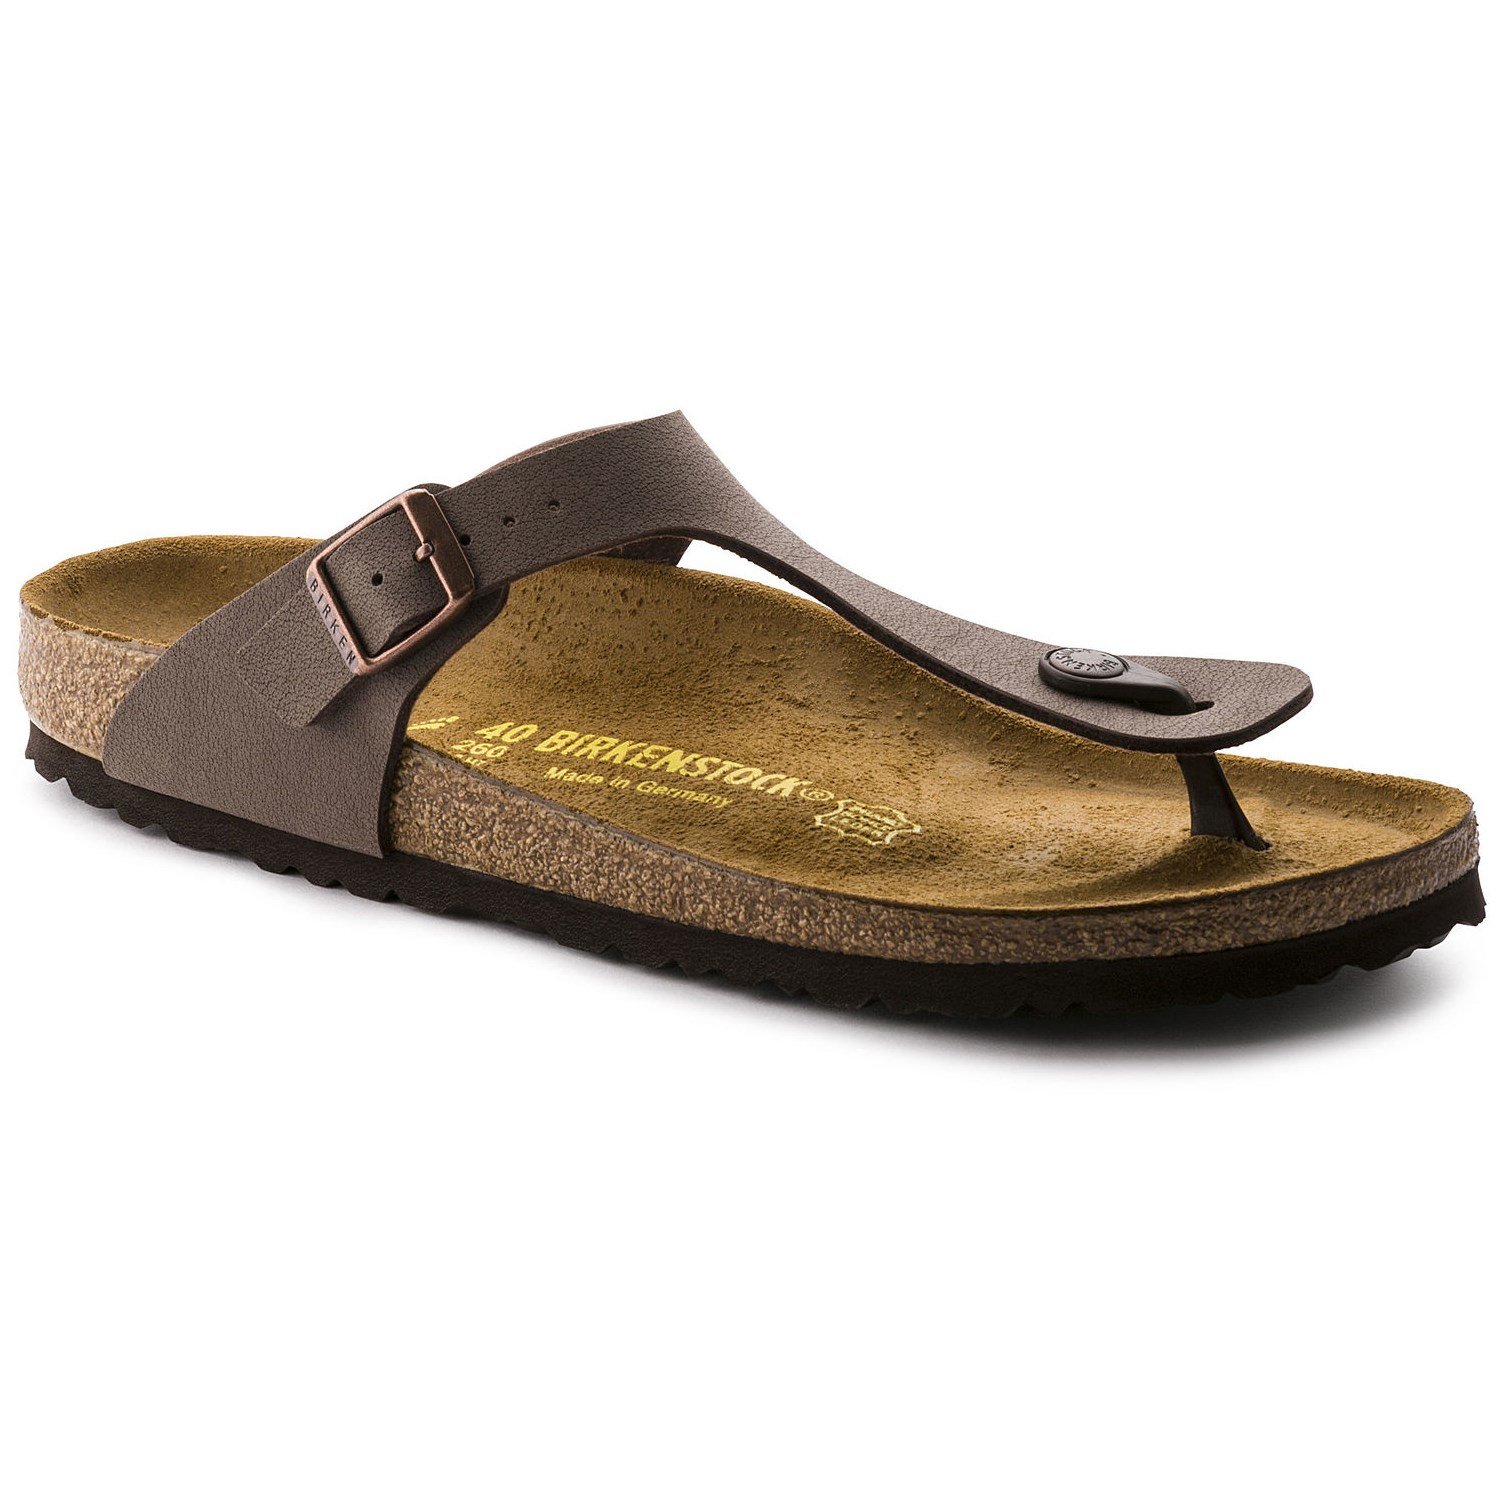 birkibuc sandals